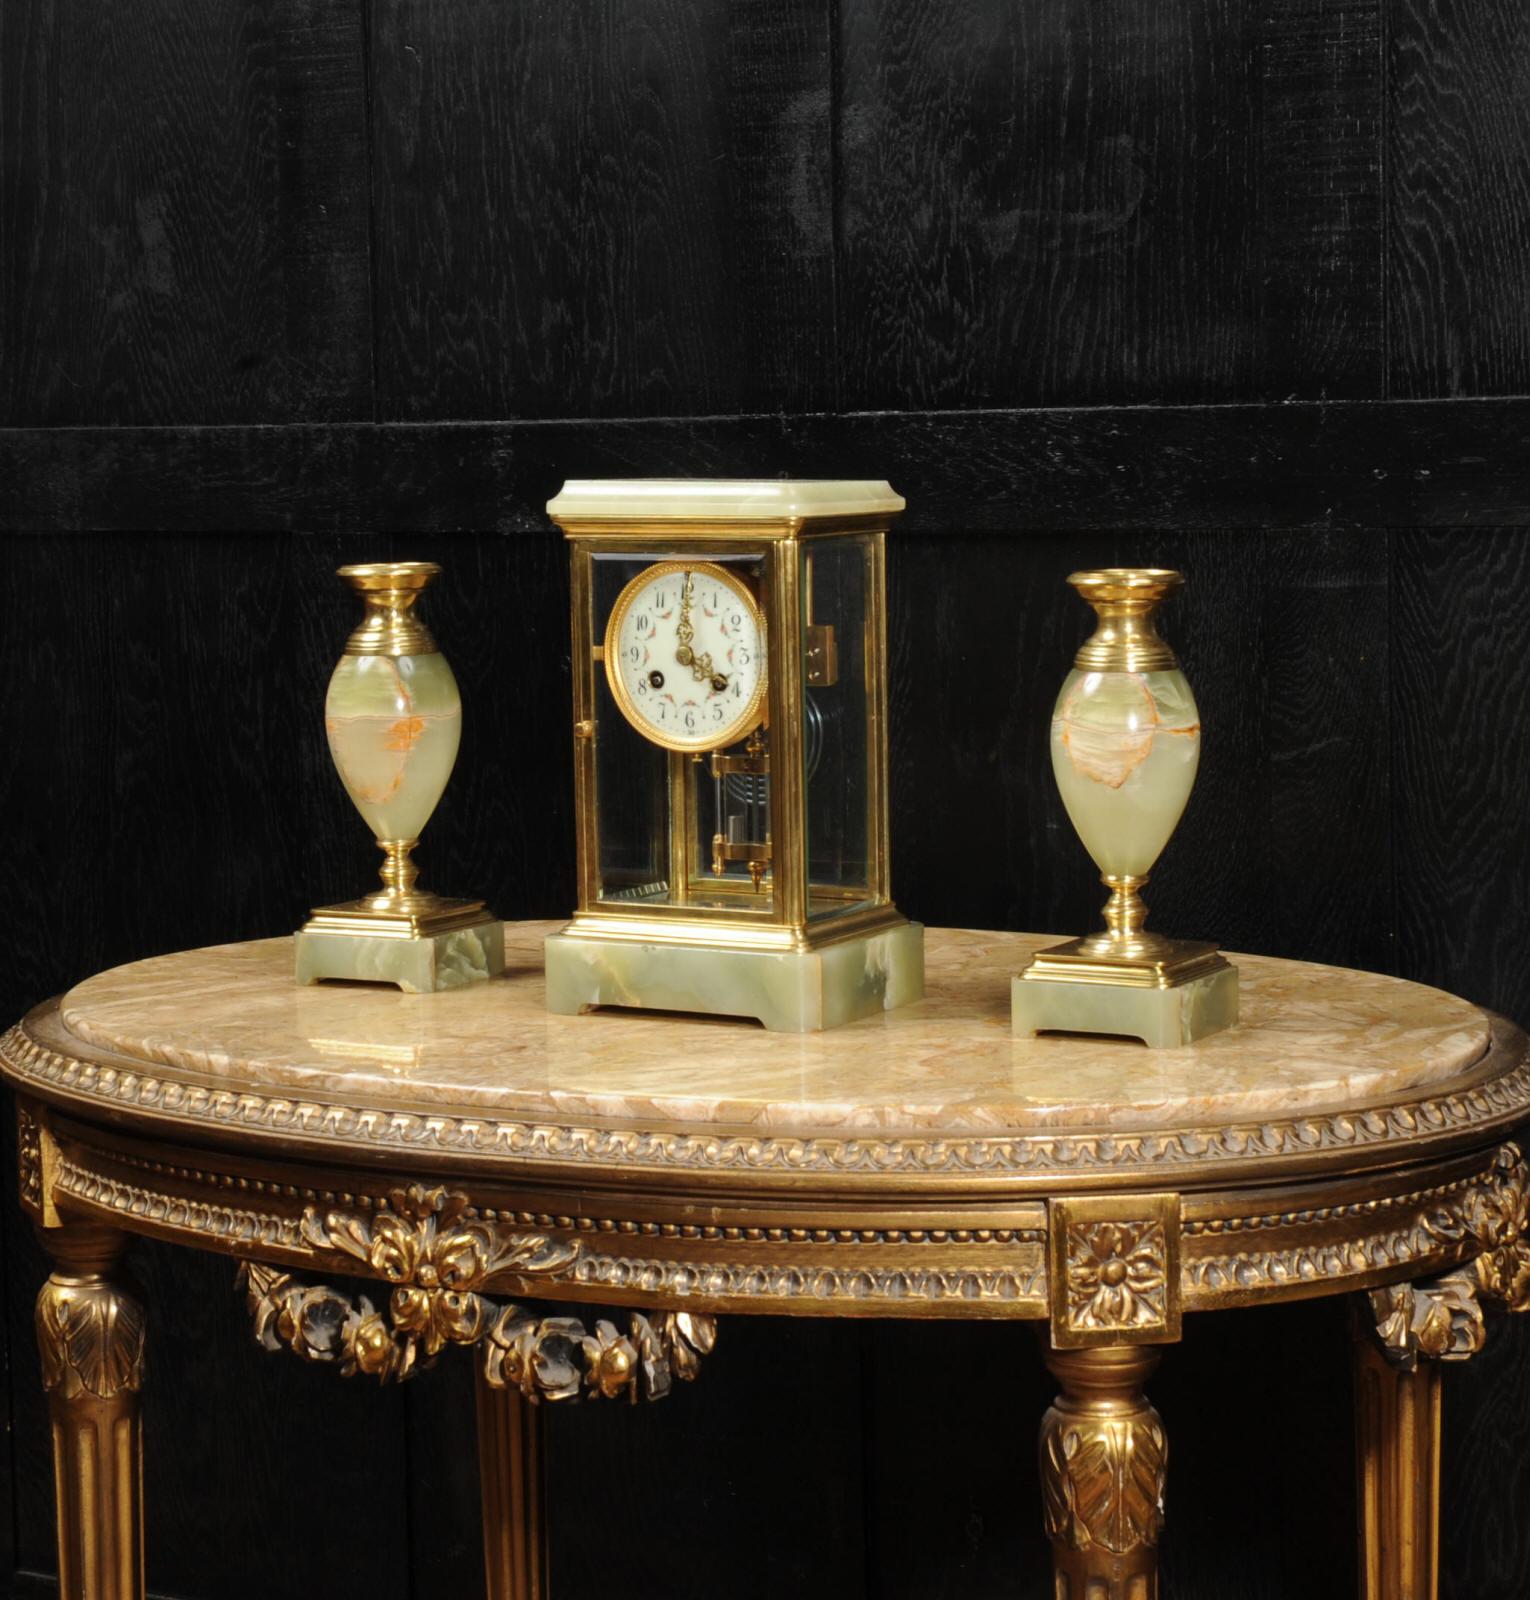 Gilt Antique French Four Glass Crystal Regulator Clock Set in Onyx and Ormolu